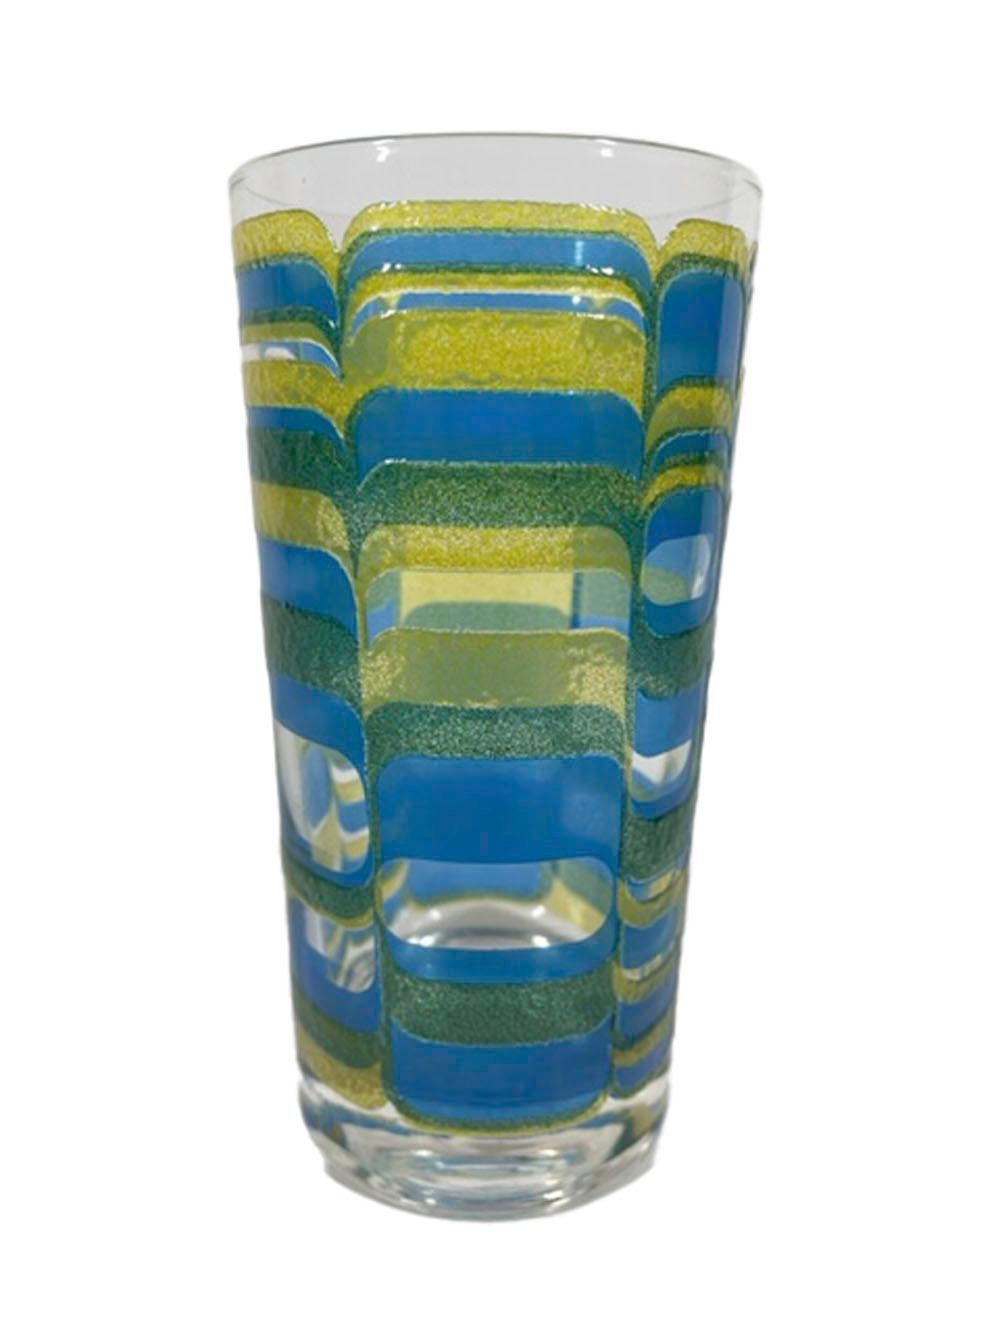 pasinski glassware